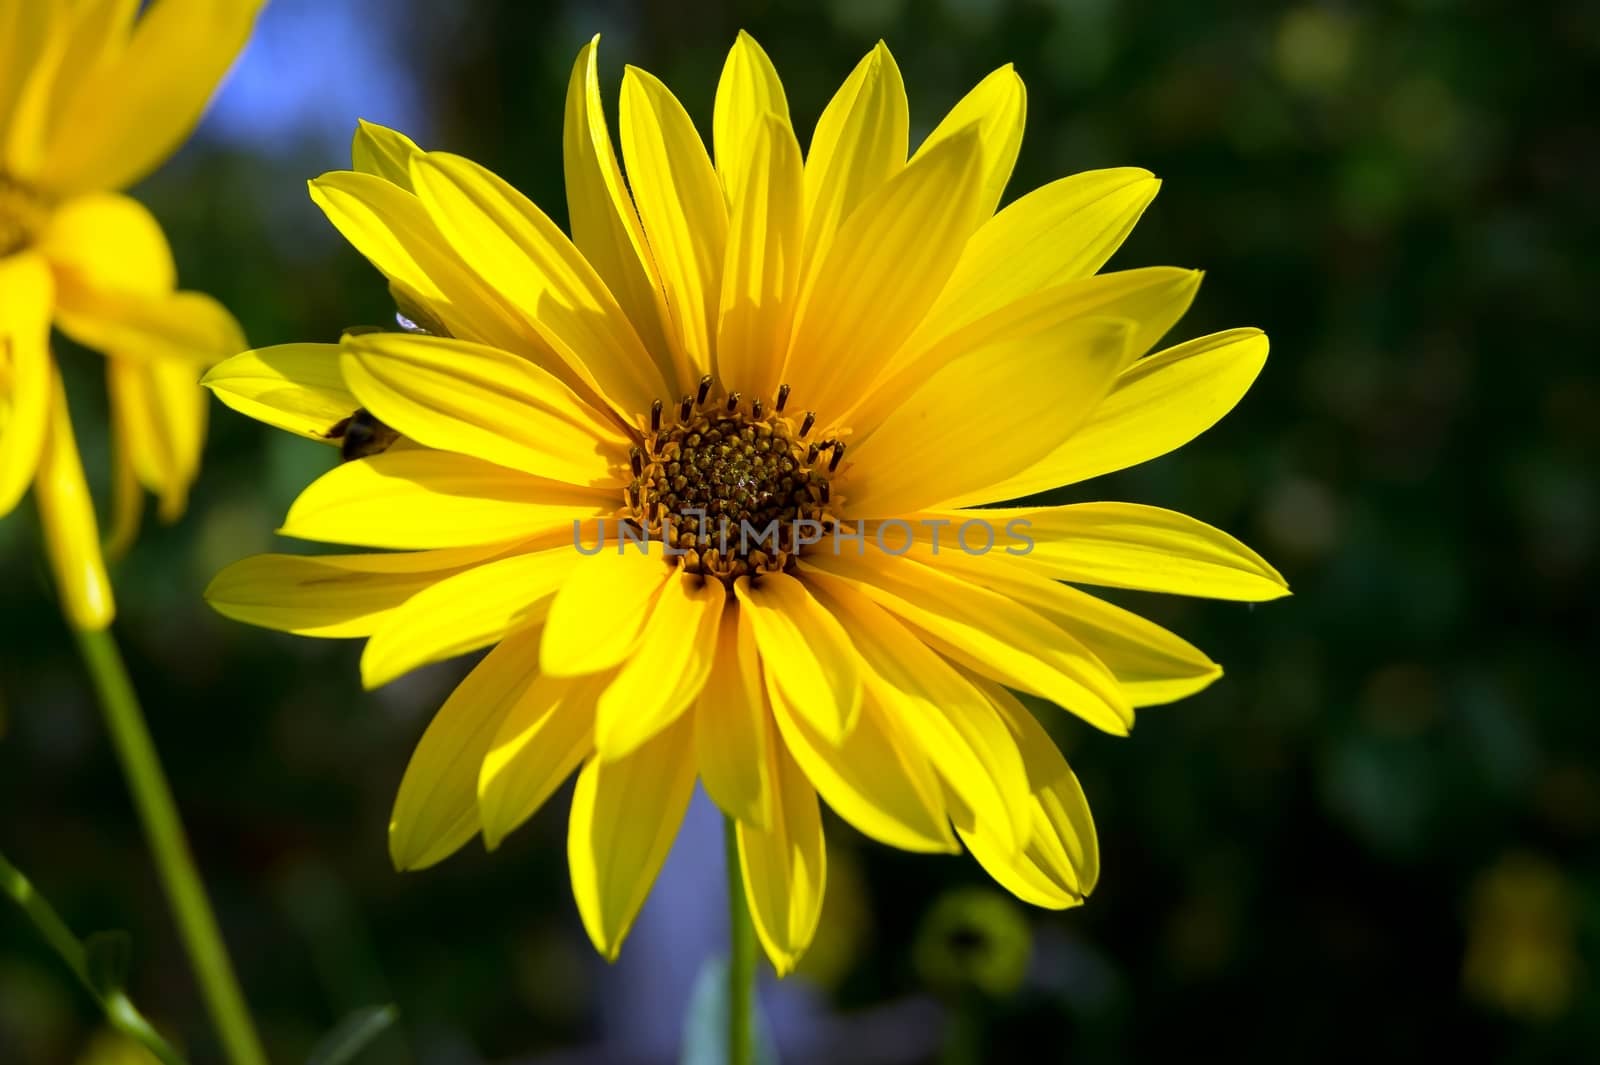 The yellow daisy (Argyranthemum frutescens) beautiful autumn flower.